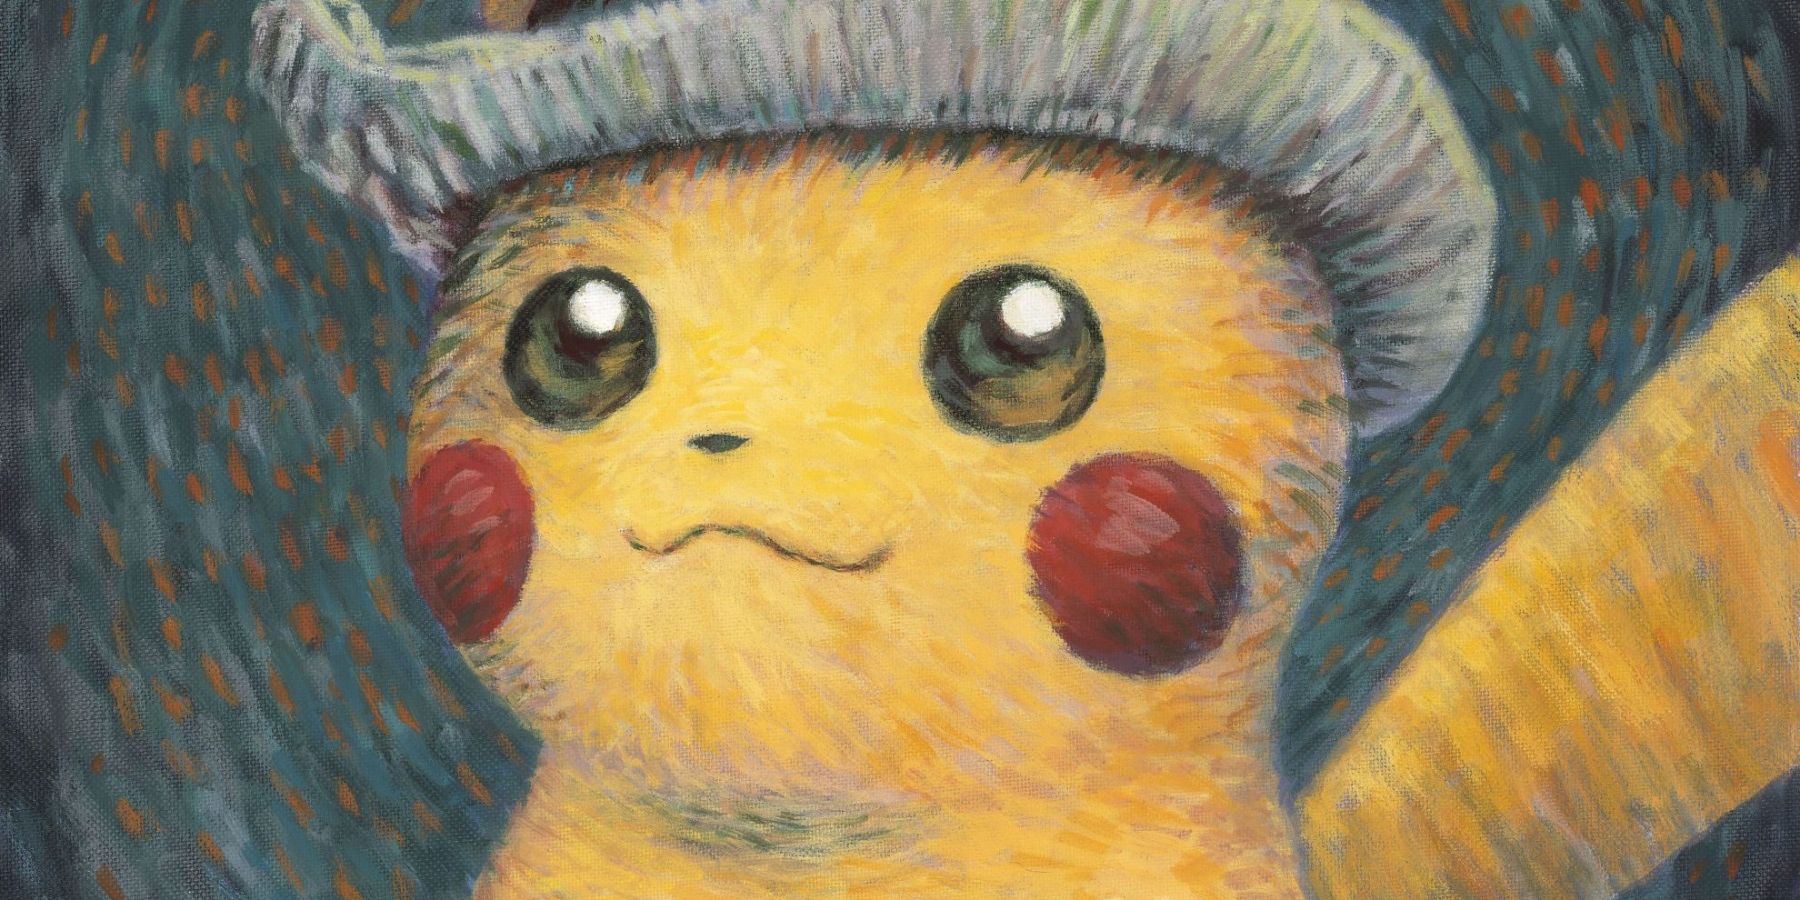 Artwork of Pikachu wearing a gray felt hat, mimicking Vincent van Gogh's famous style. It's a parody of a famous Van Gogh self-portrait.